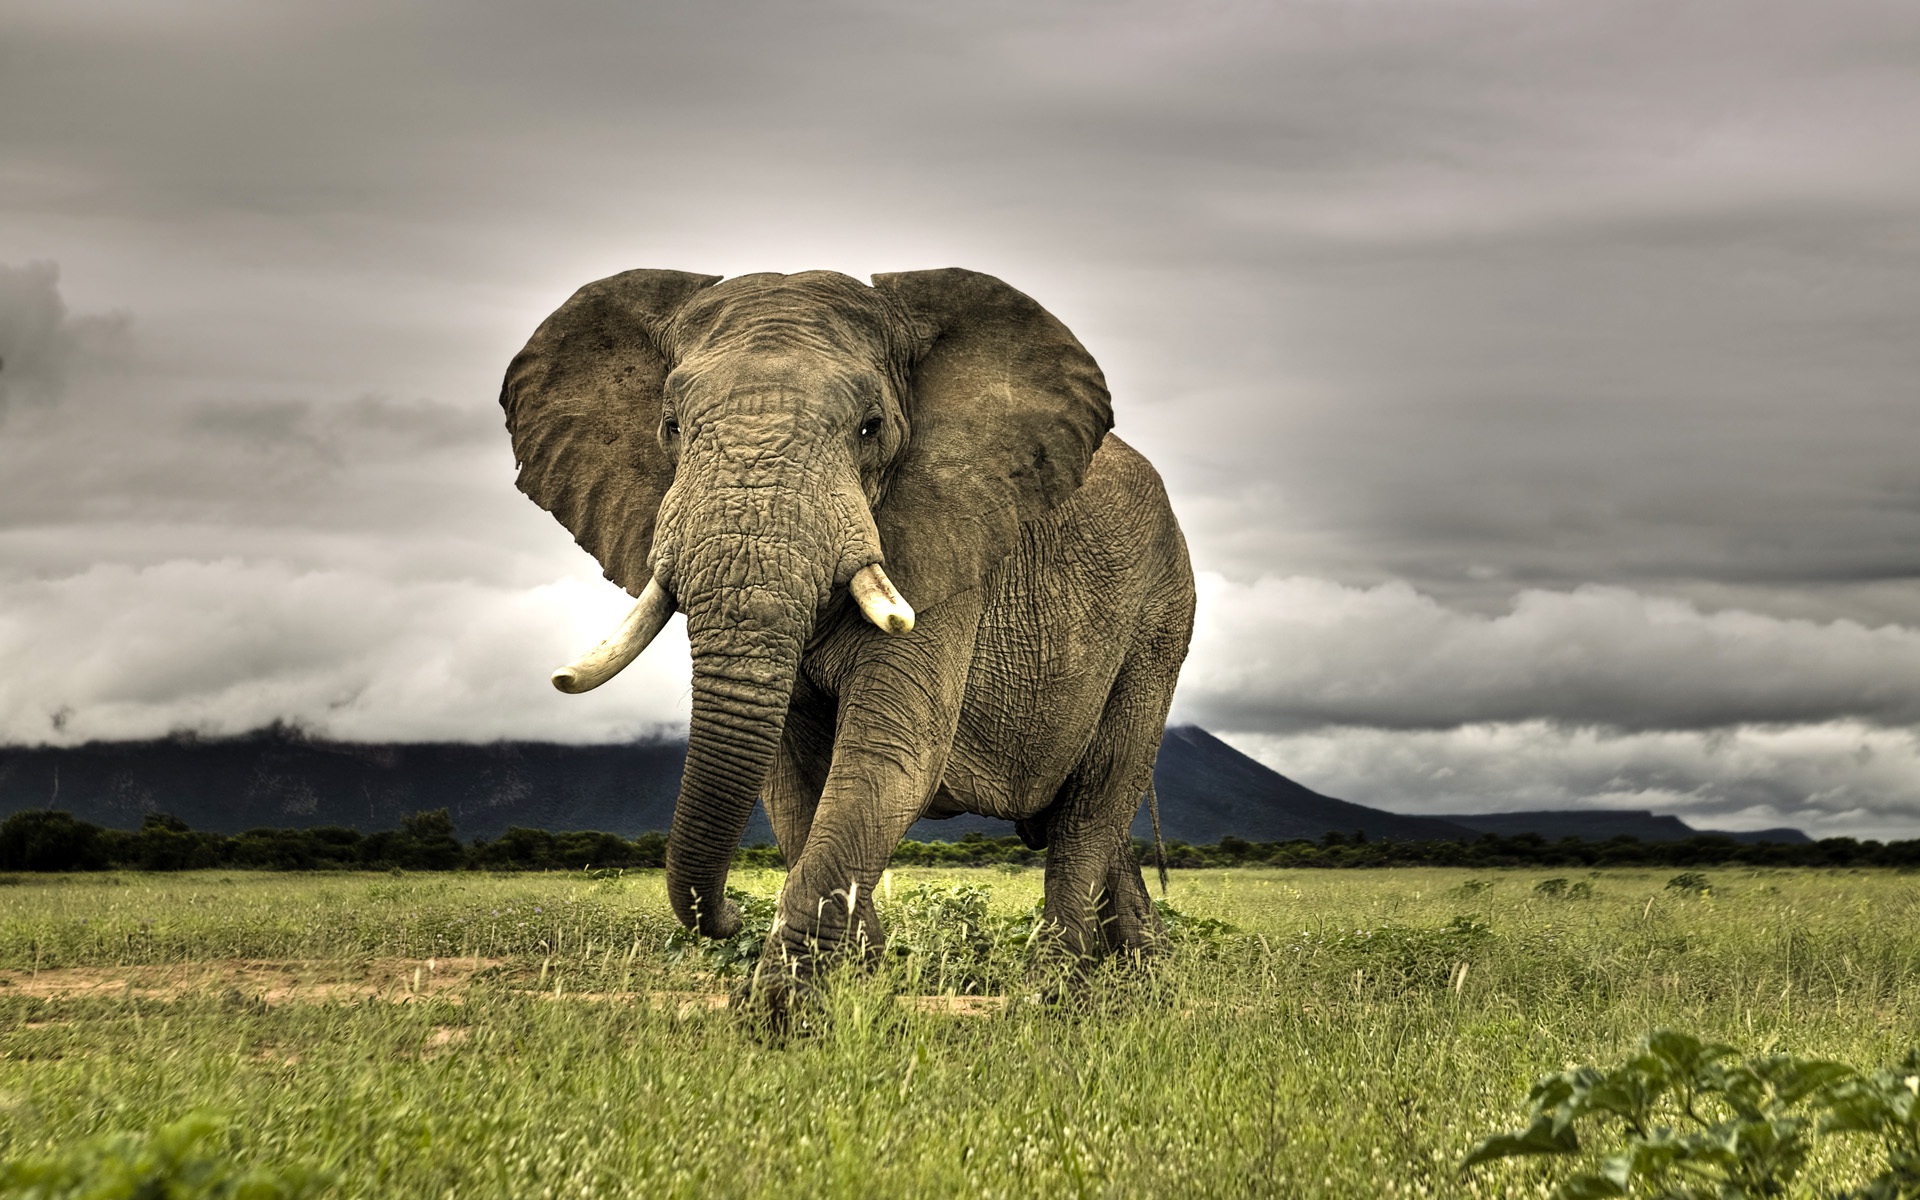 Giant elephant in forest wide full HD | HD Wallpapers Rocks